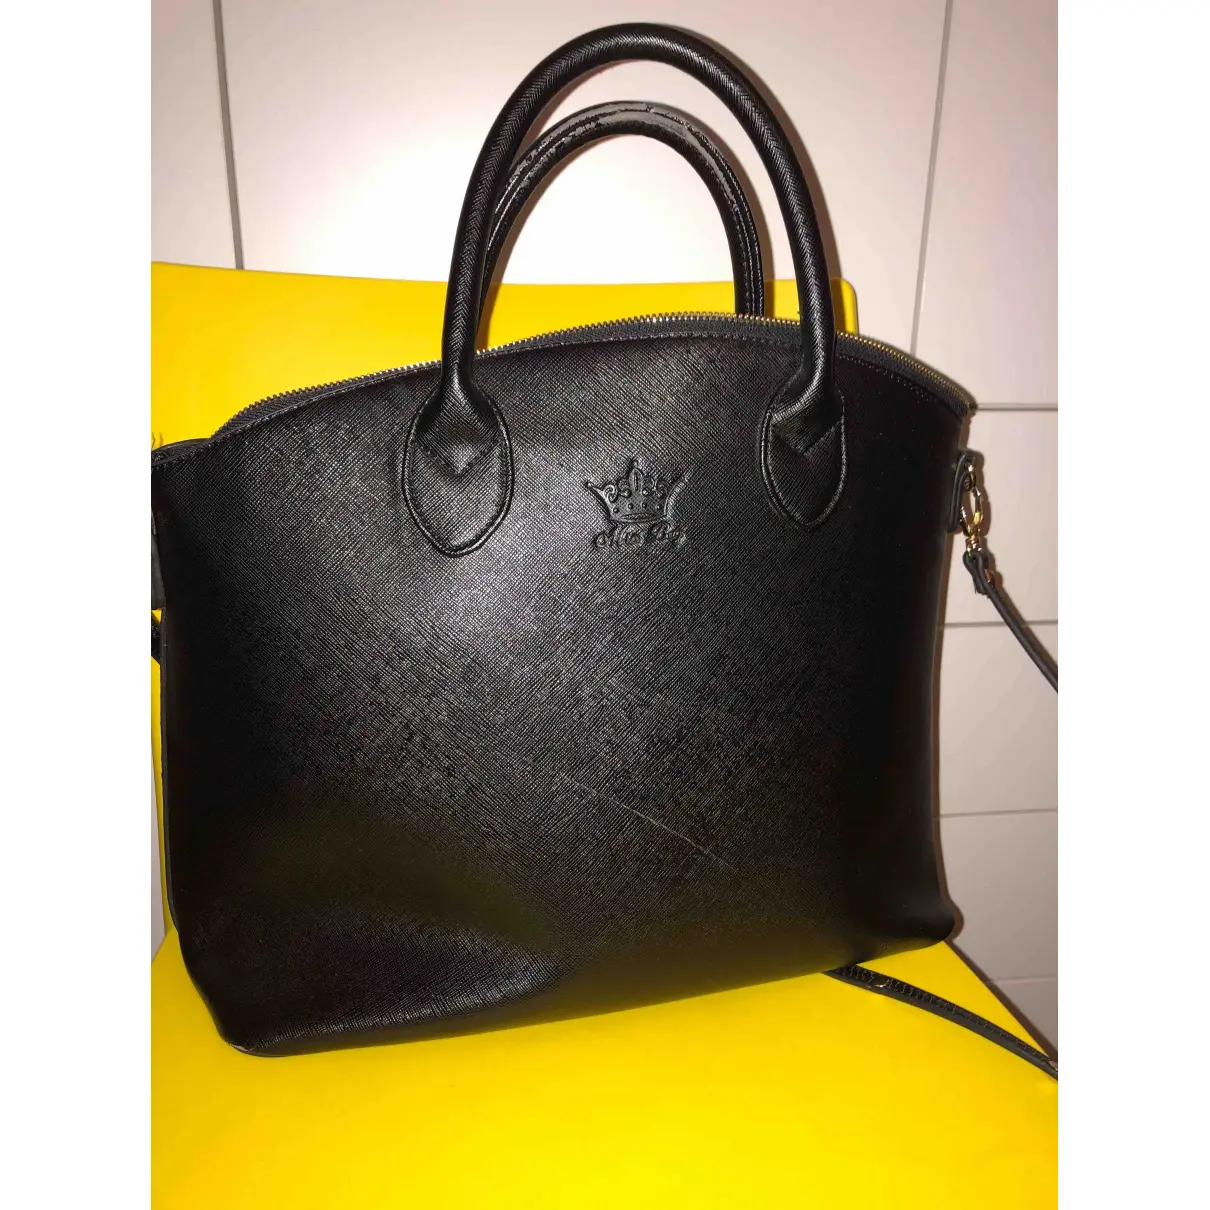 Buy Mia Bag Handbag online